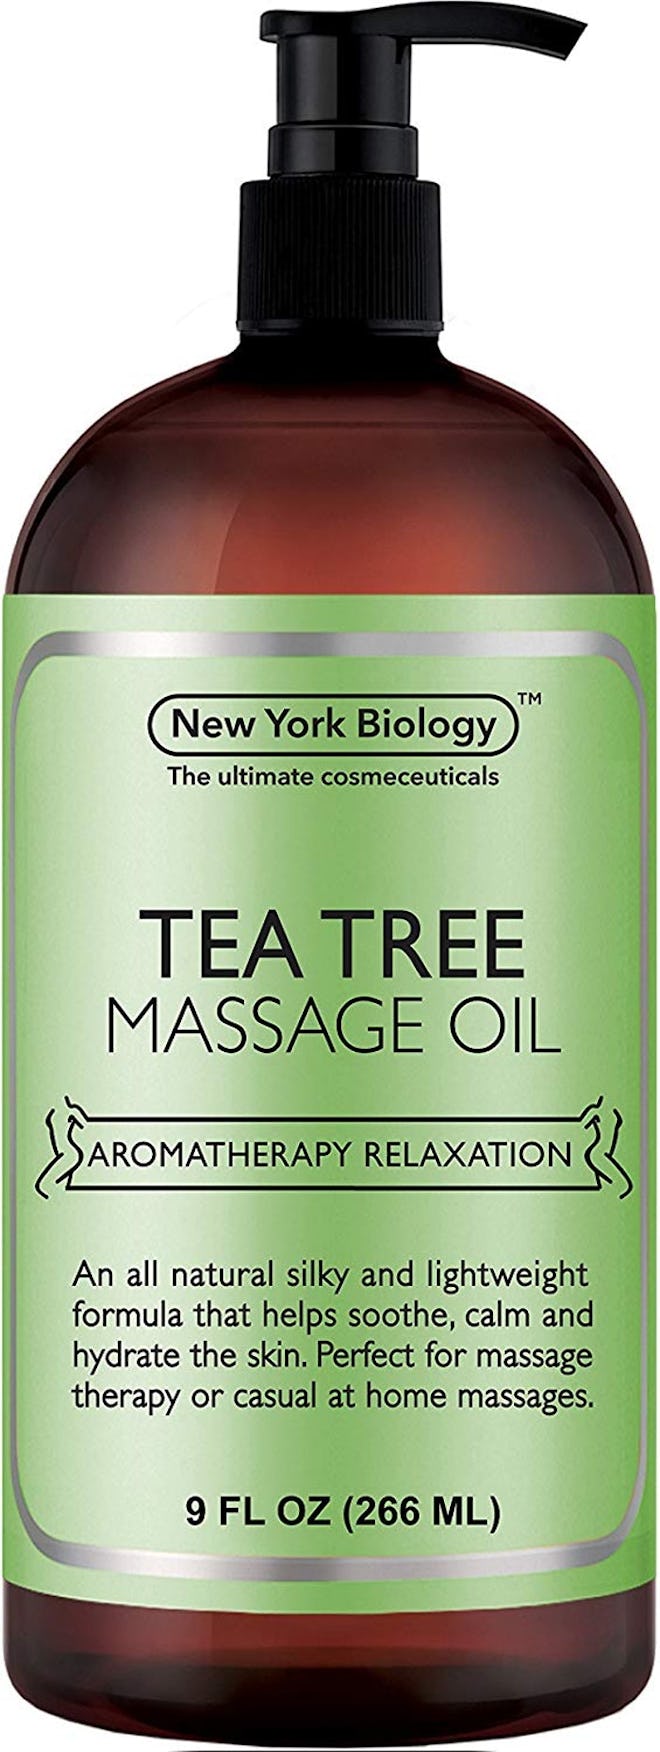 New York Biology Tea Tree Massage Oil